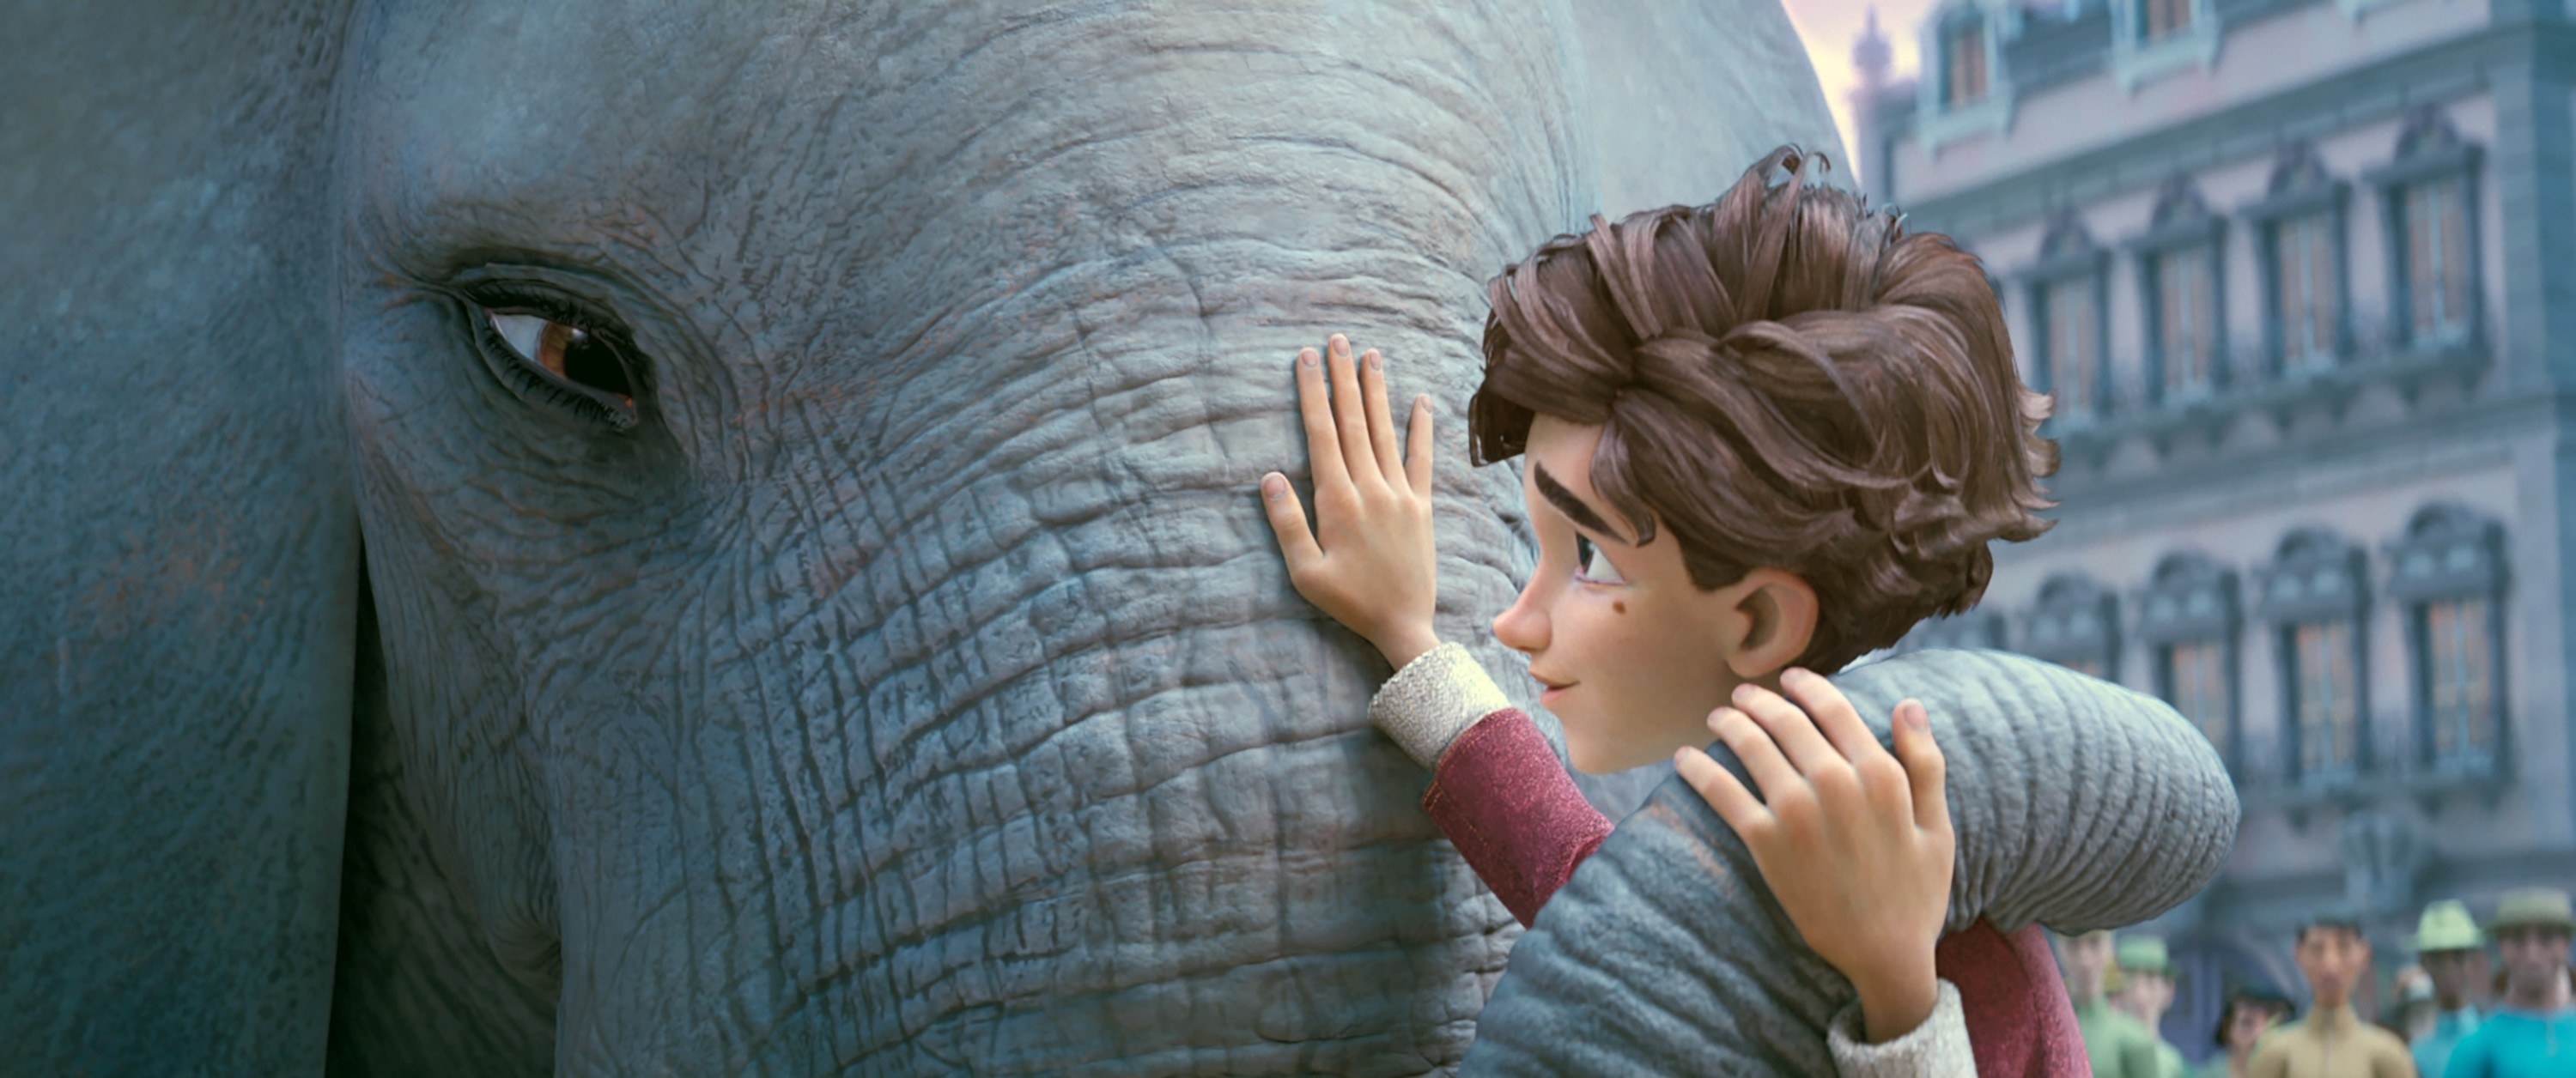 A young boy pets an elephant